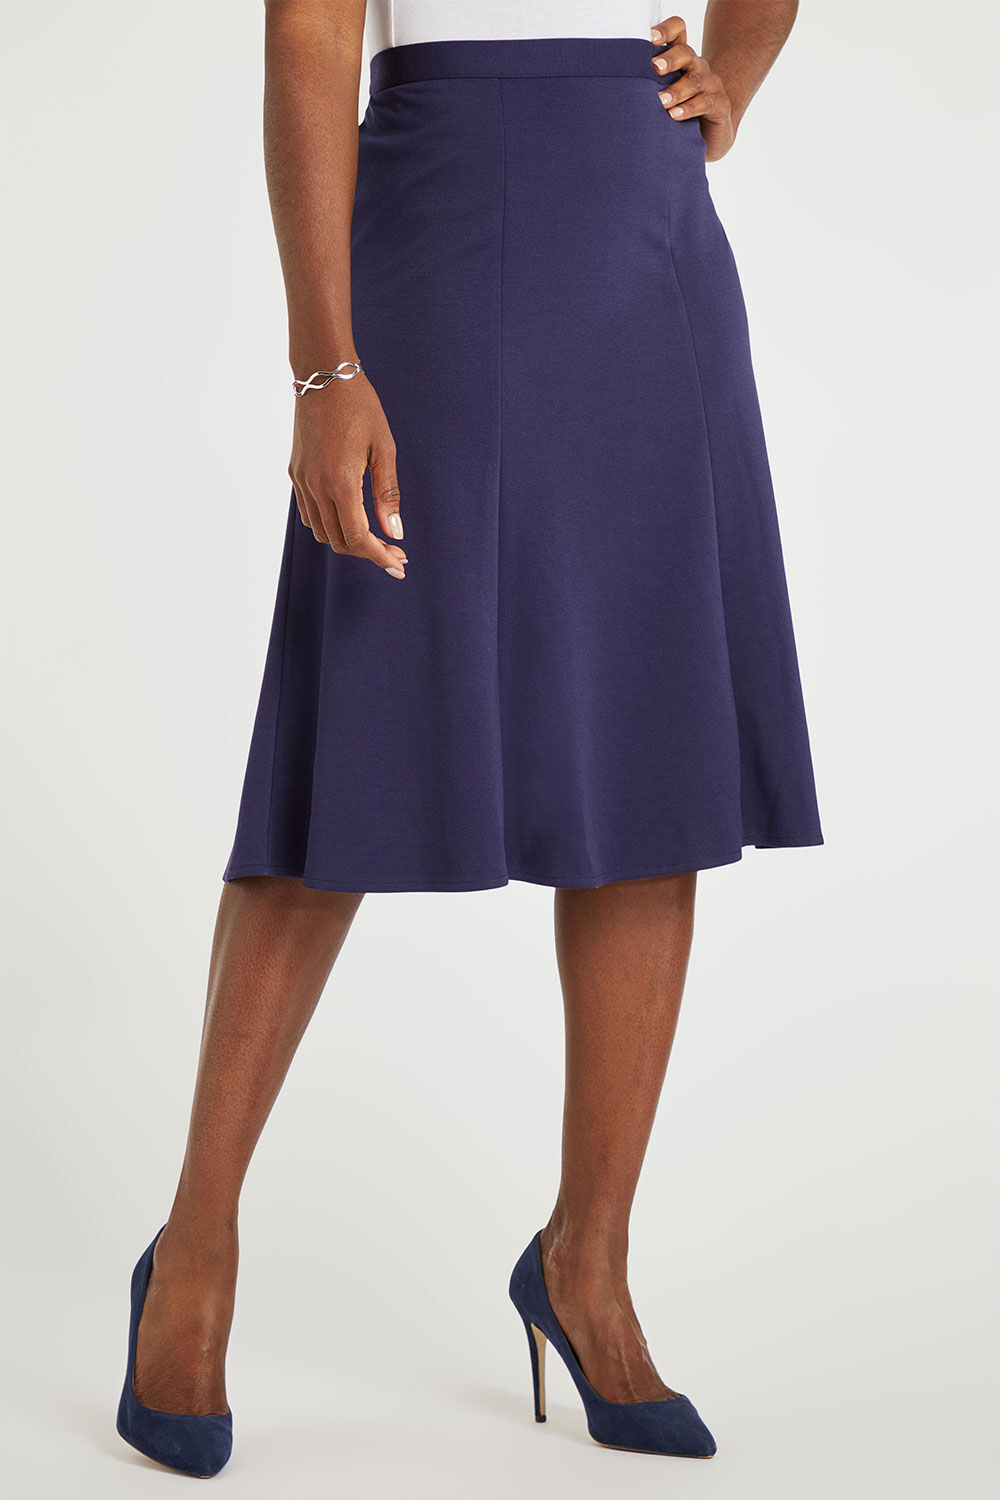 Bonmarche Navy Blue Ladies Smart Ponte Flippy Skirt, Size: 20